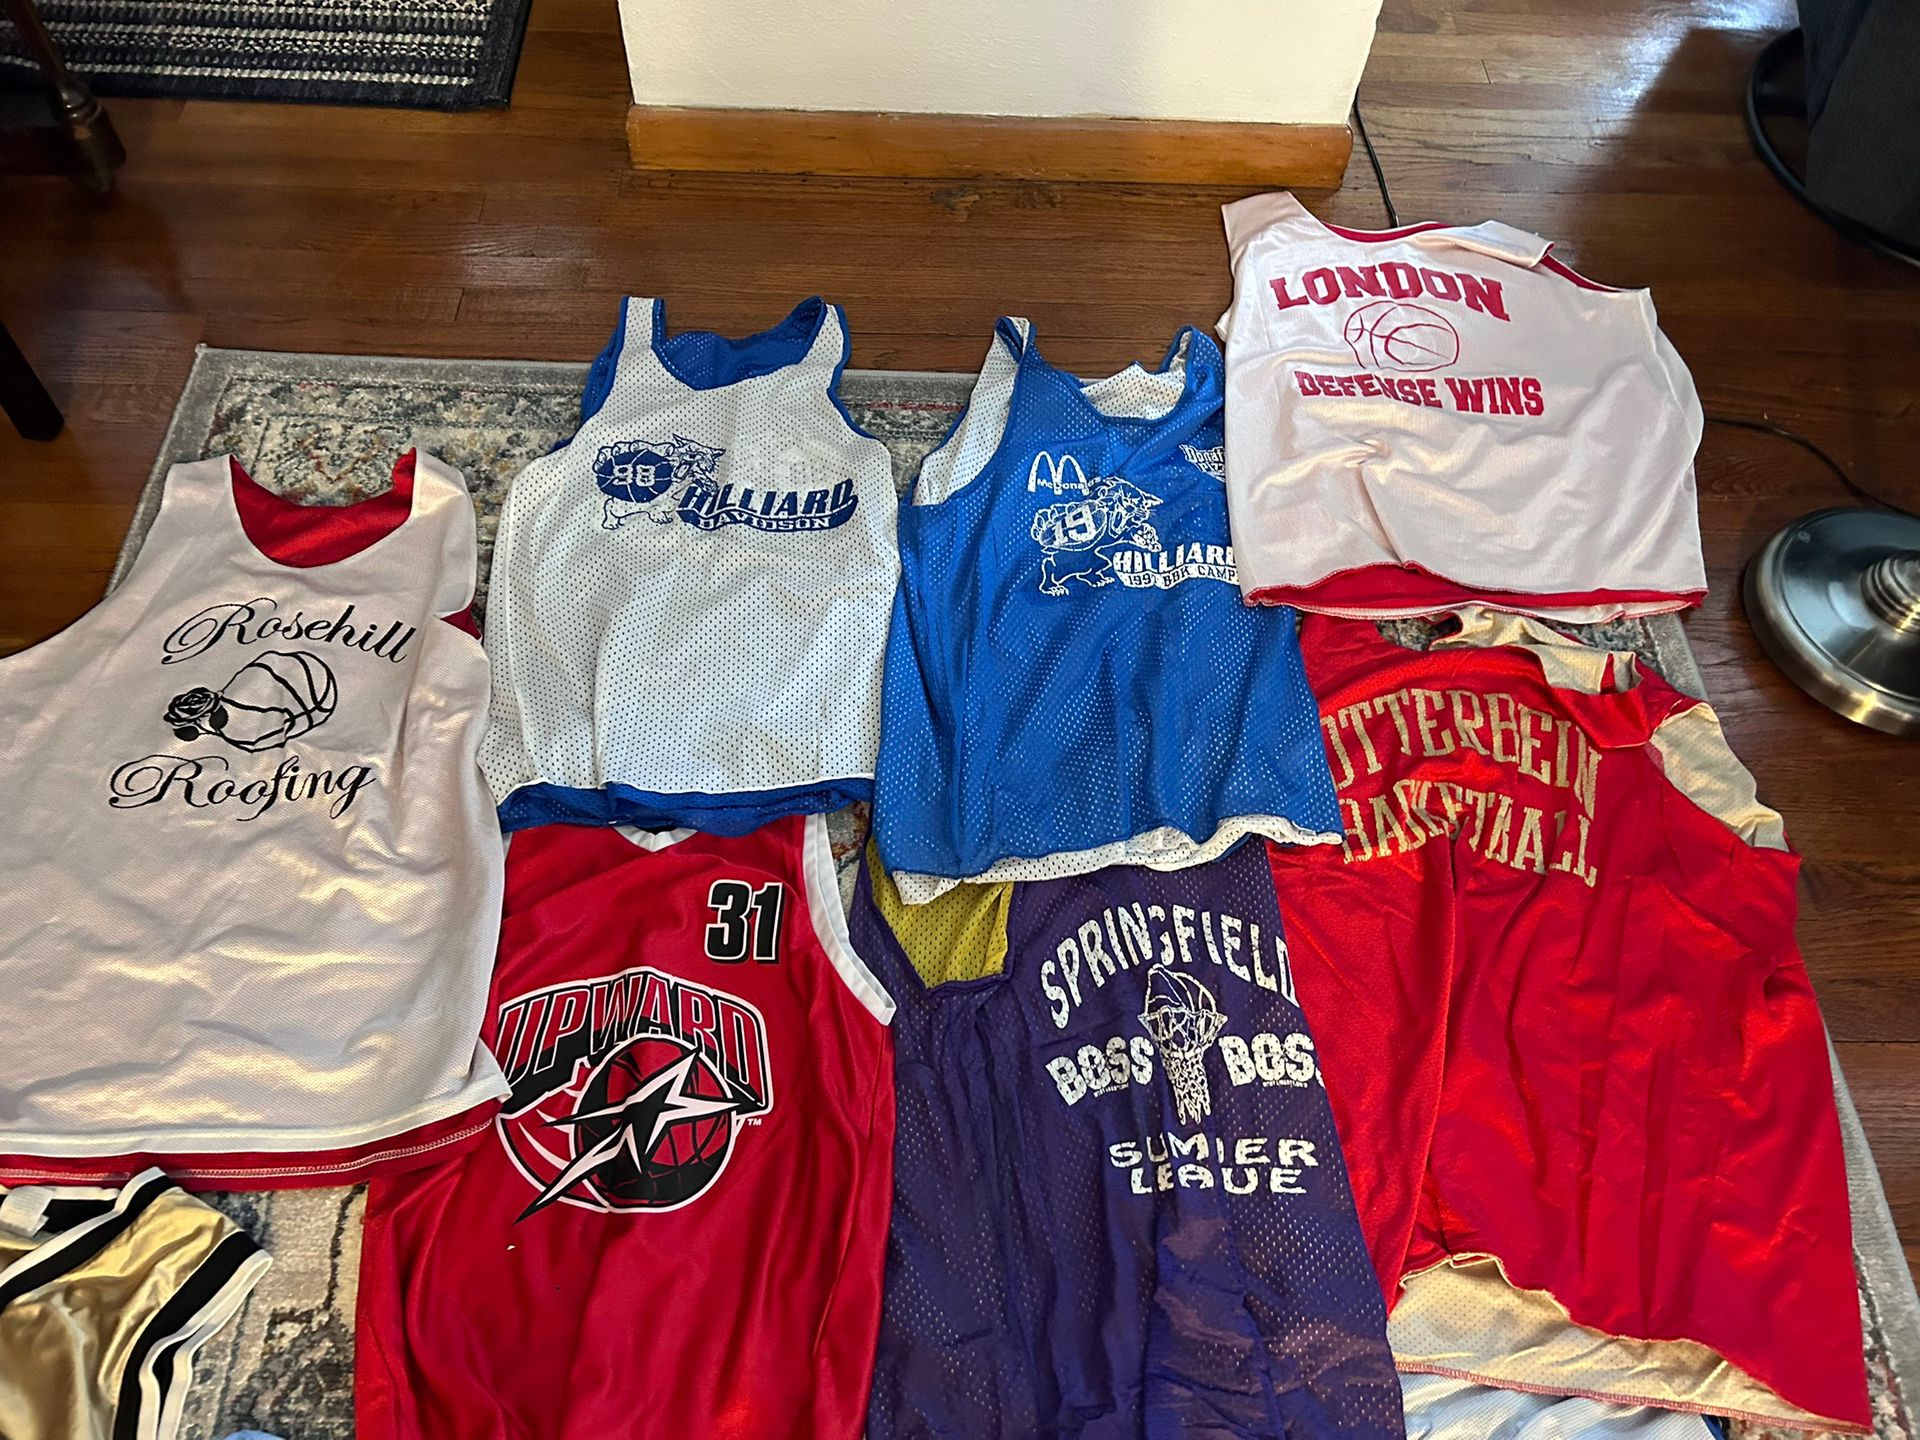 Basketball Jerseys 